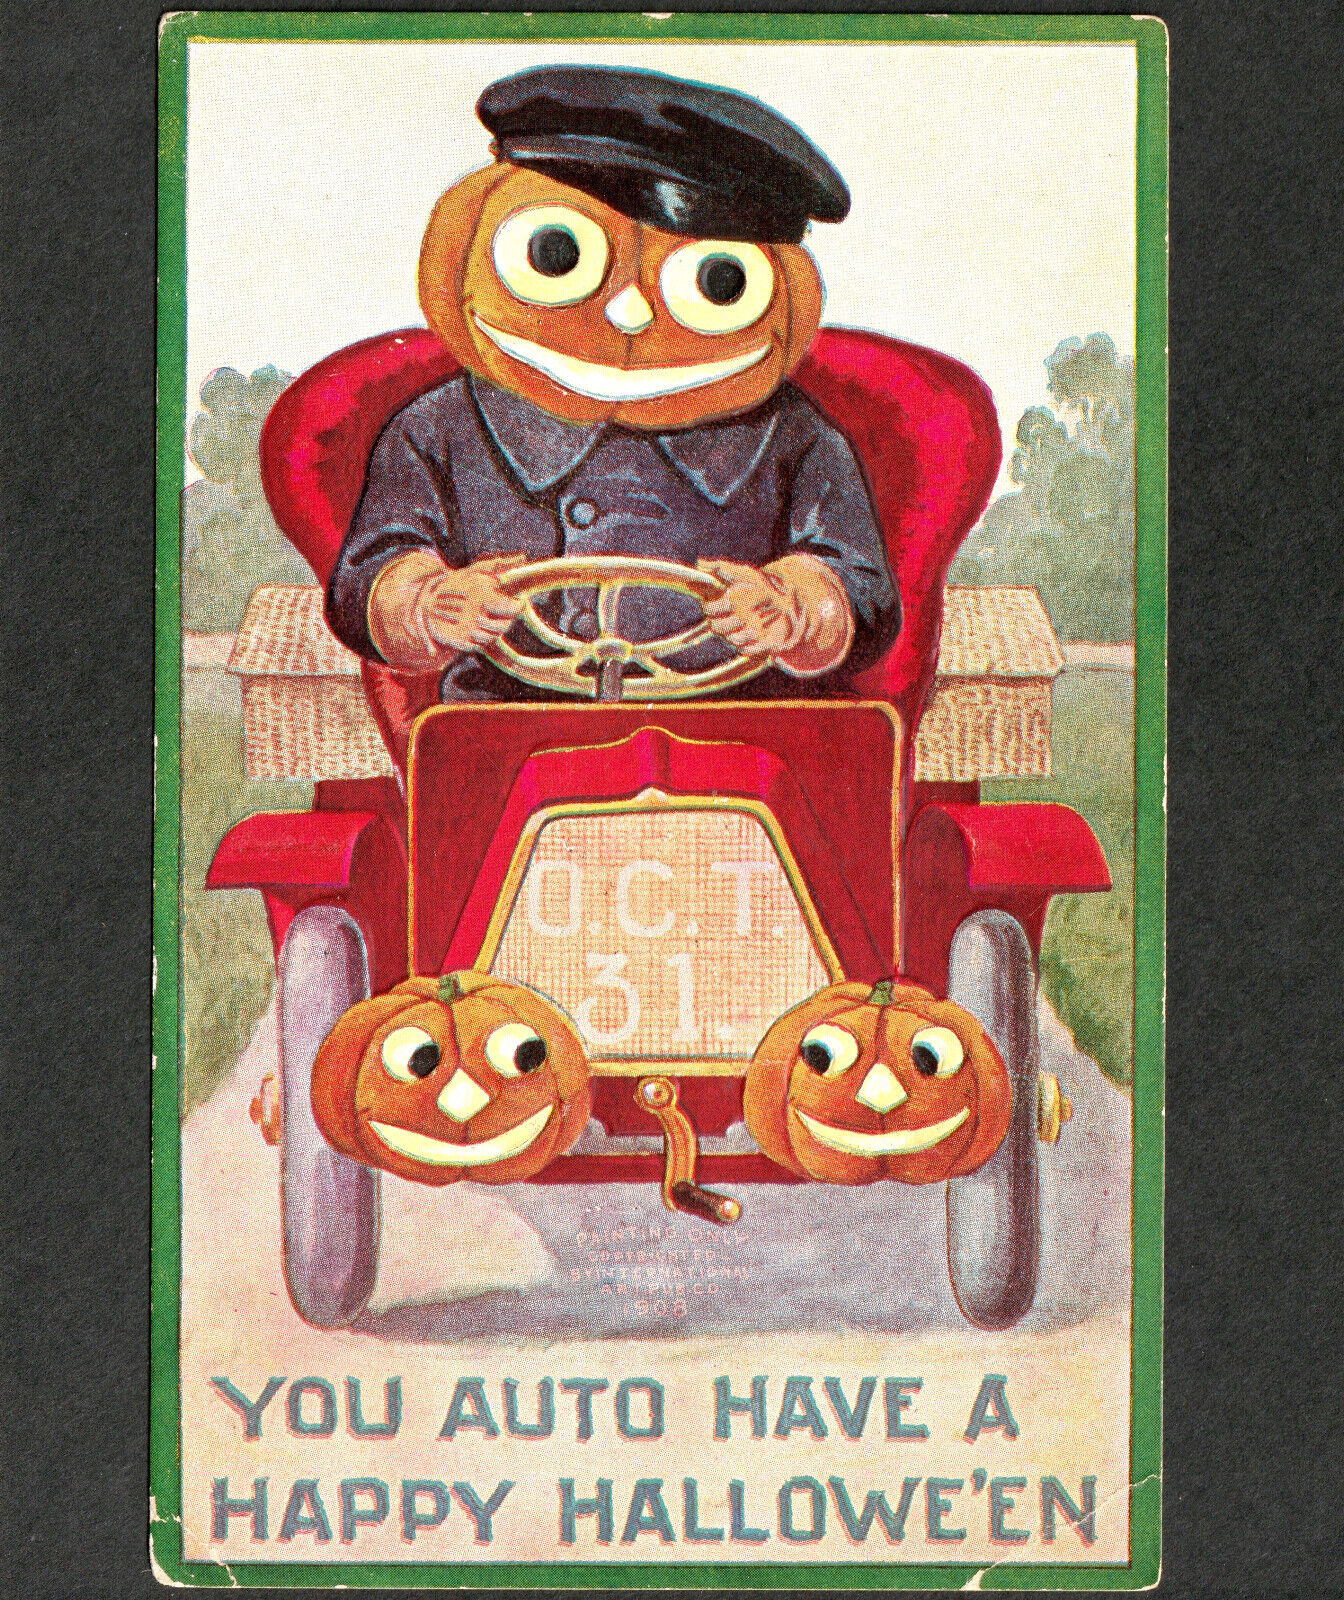 You Auto Have A Happy Halloween JOL Pumpkin 1908 Int'l Art Pub Co. IN1 PostCard